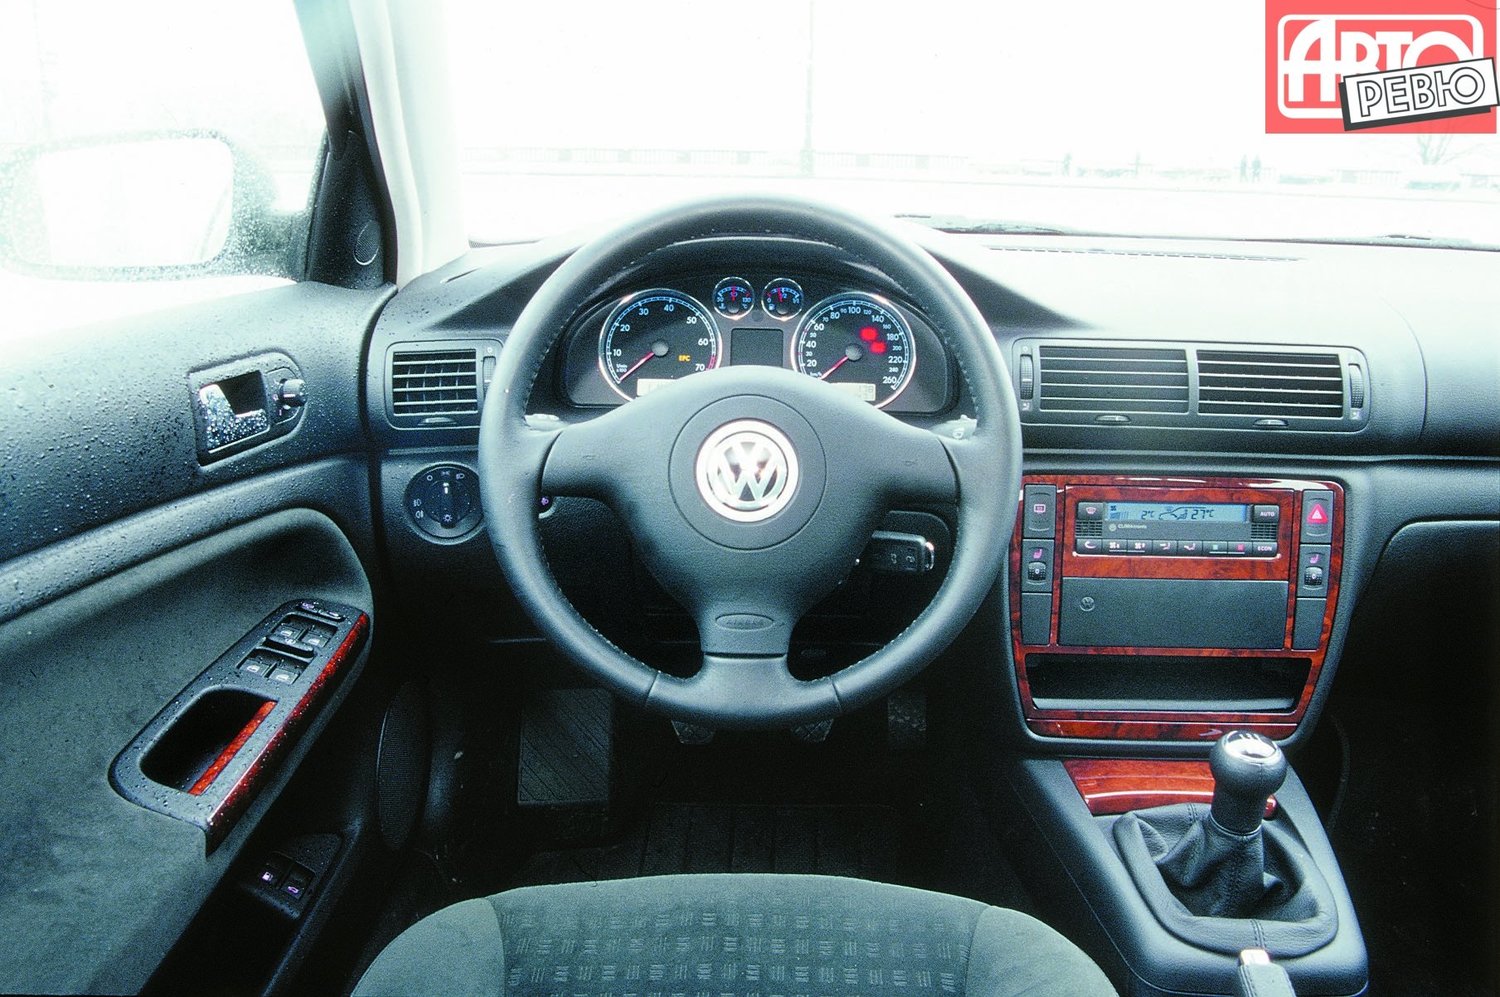 универсал Volkswagen Passat 2000 - 2005г выпуска модификация 1.6 AT (102 л.с.)